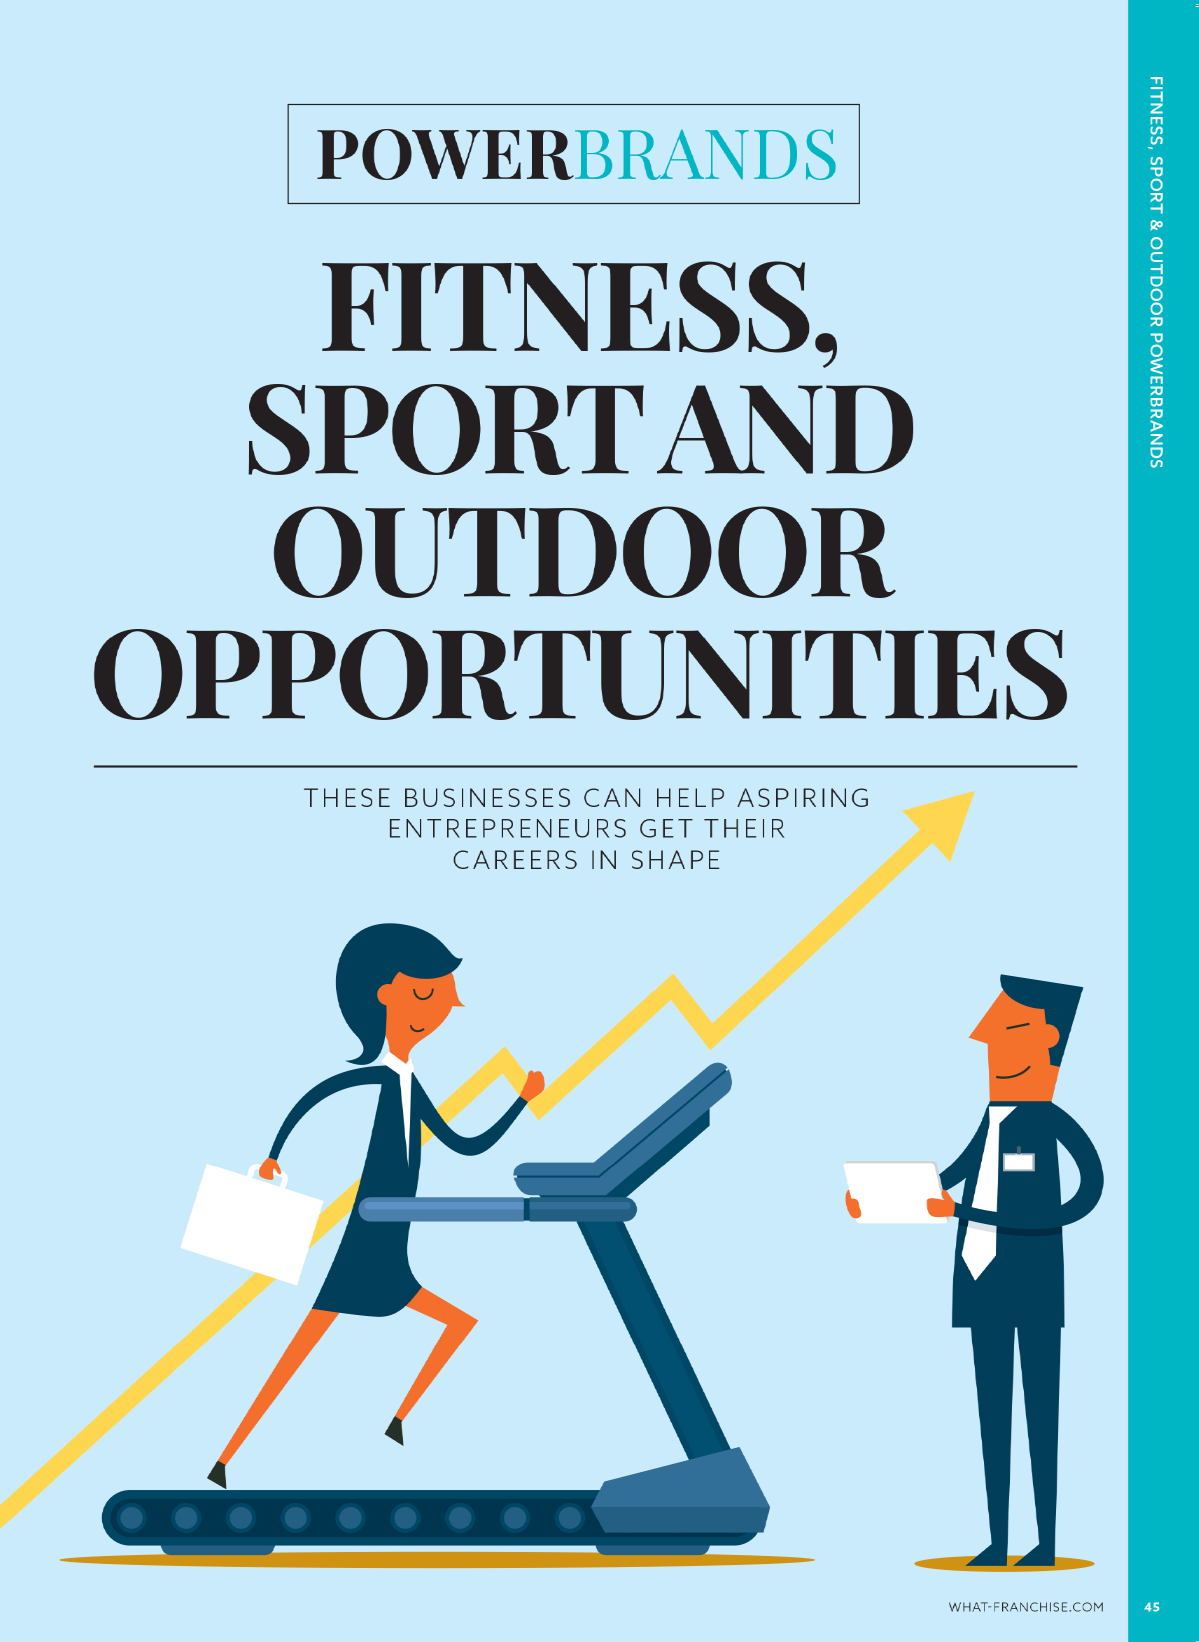 Powerbrands: Fitness, Sport and Outdoor opportunities